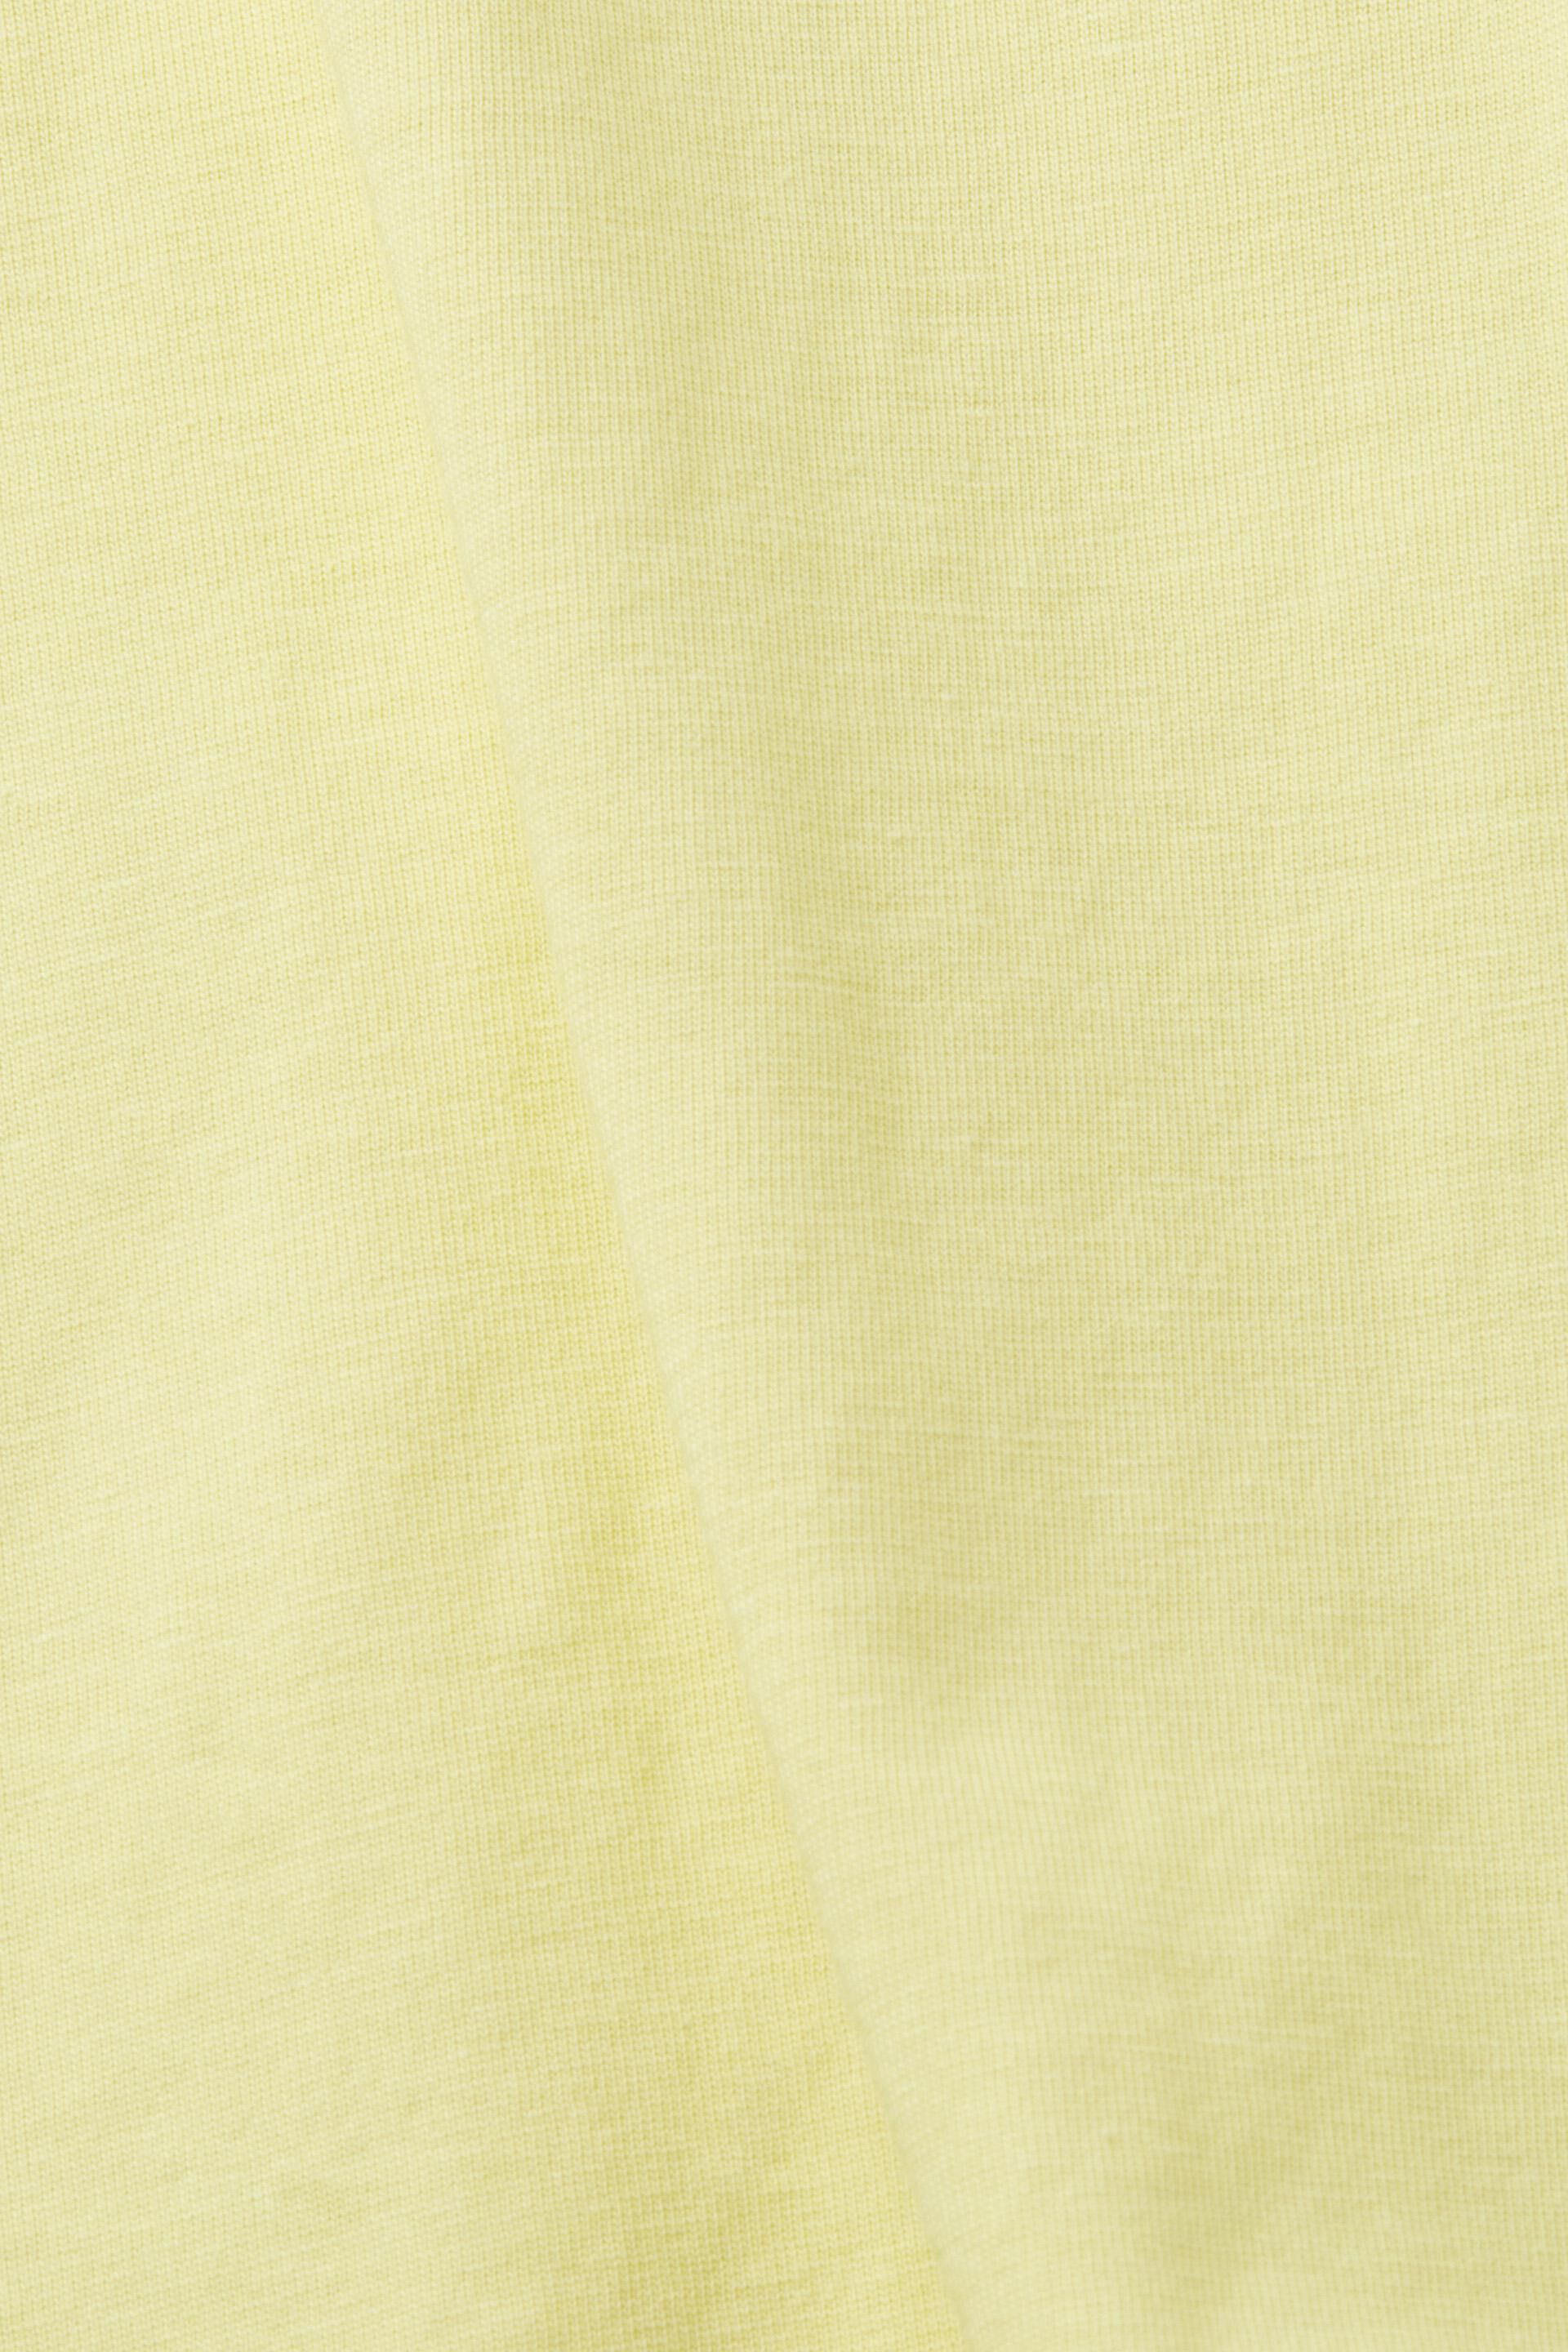 Esprit Jersey-T-Shirt Logo-Print mit